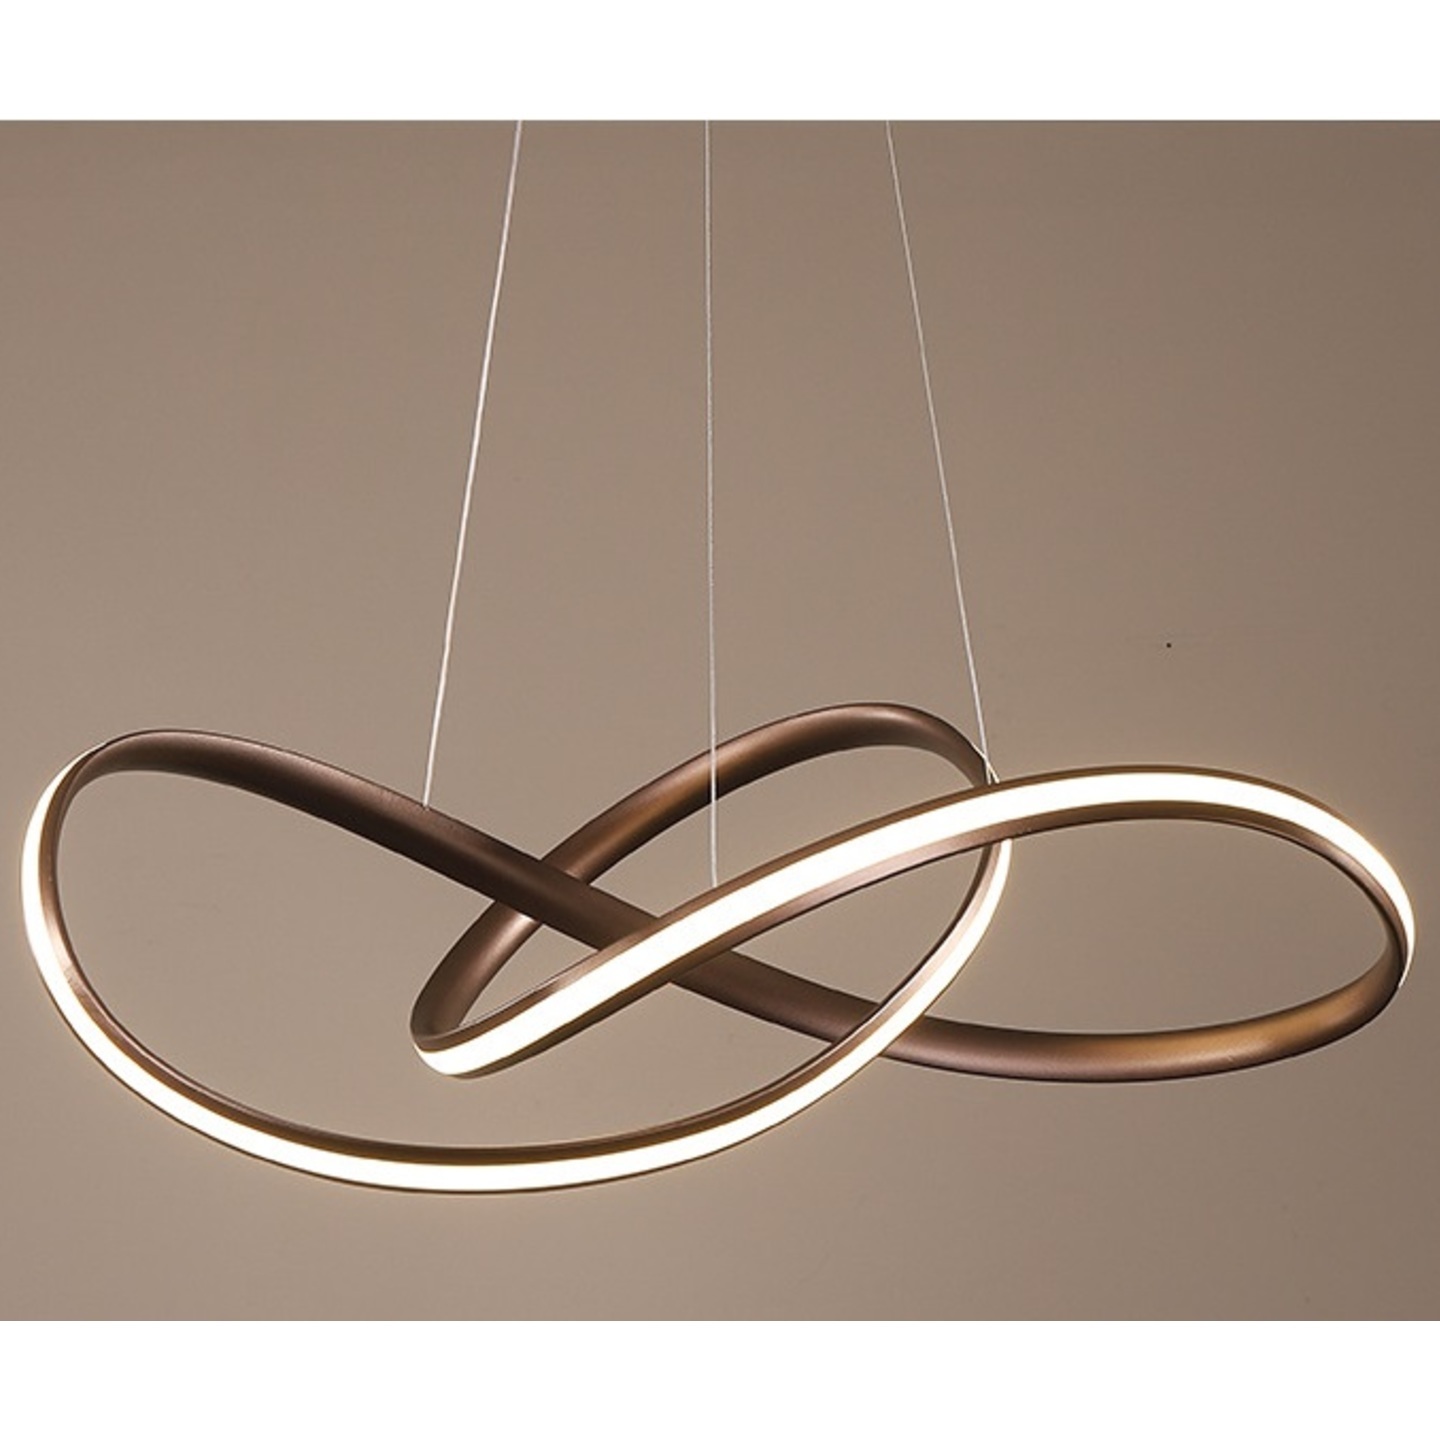 Infinity Loop Pendant Light